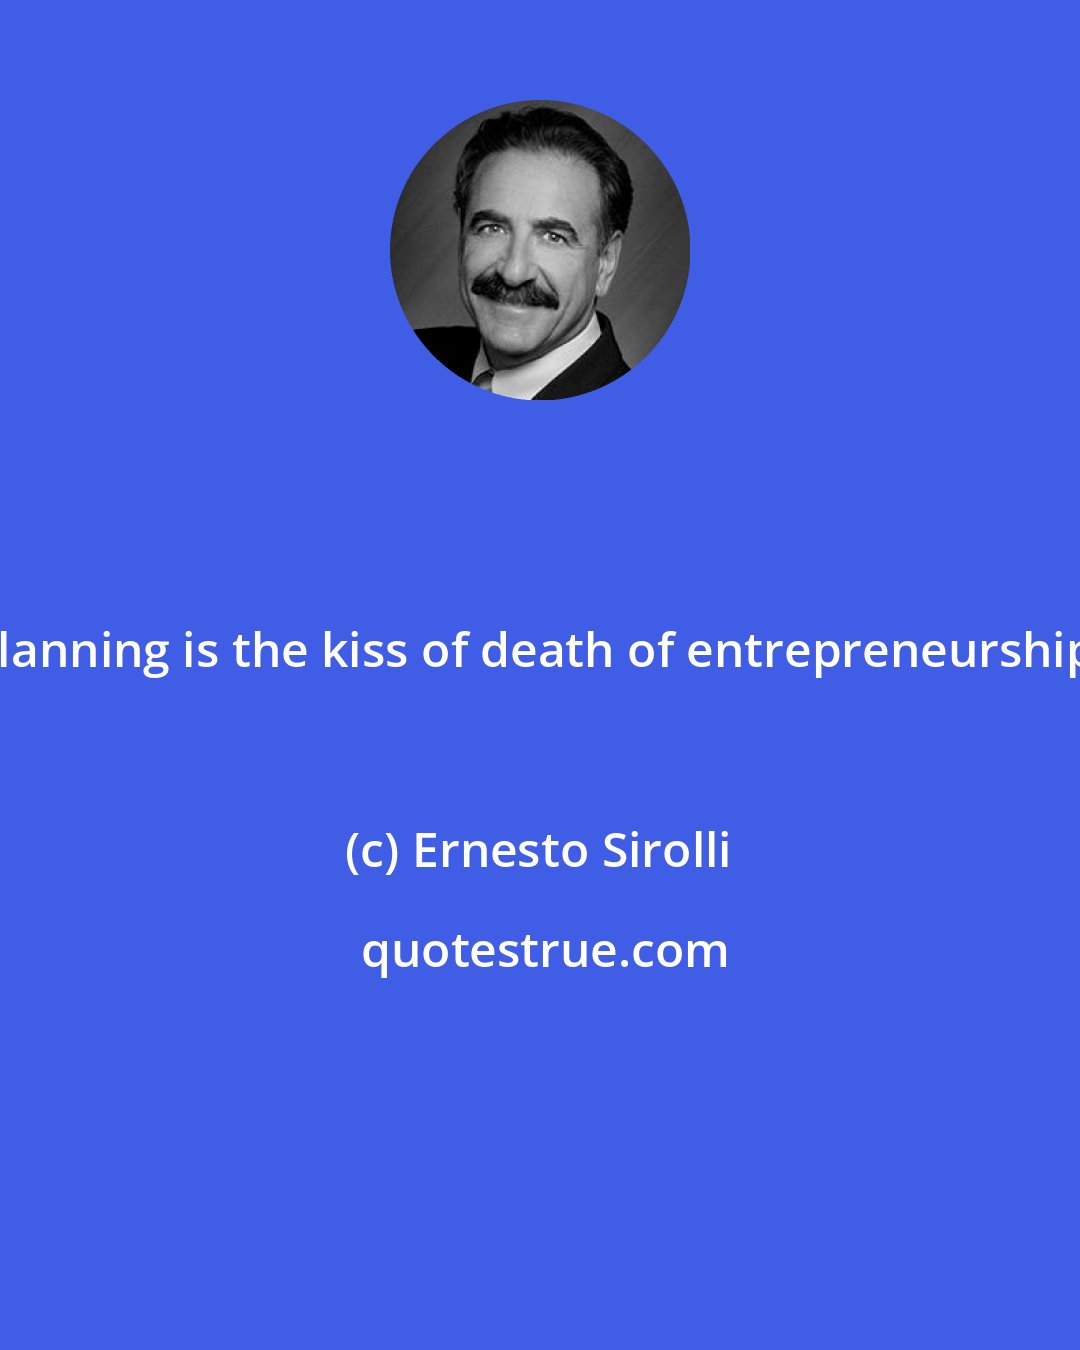 Ernesto Sirolli: Planning is the kiss of death of entrepreneurship.